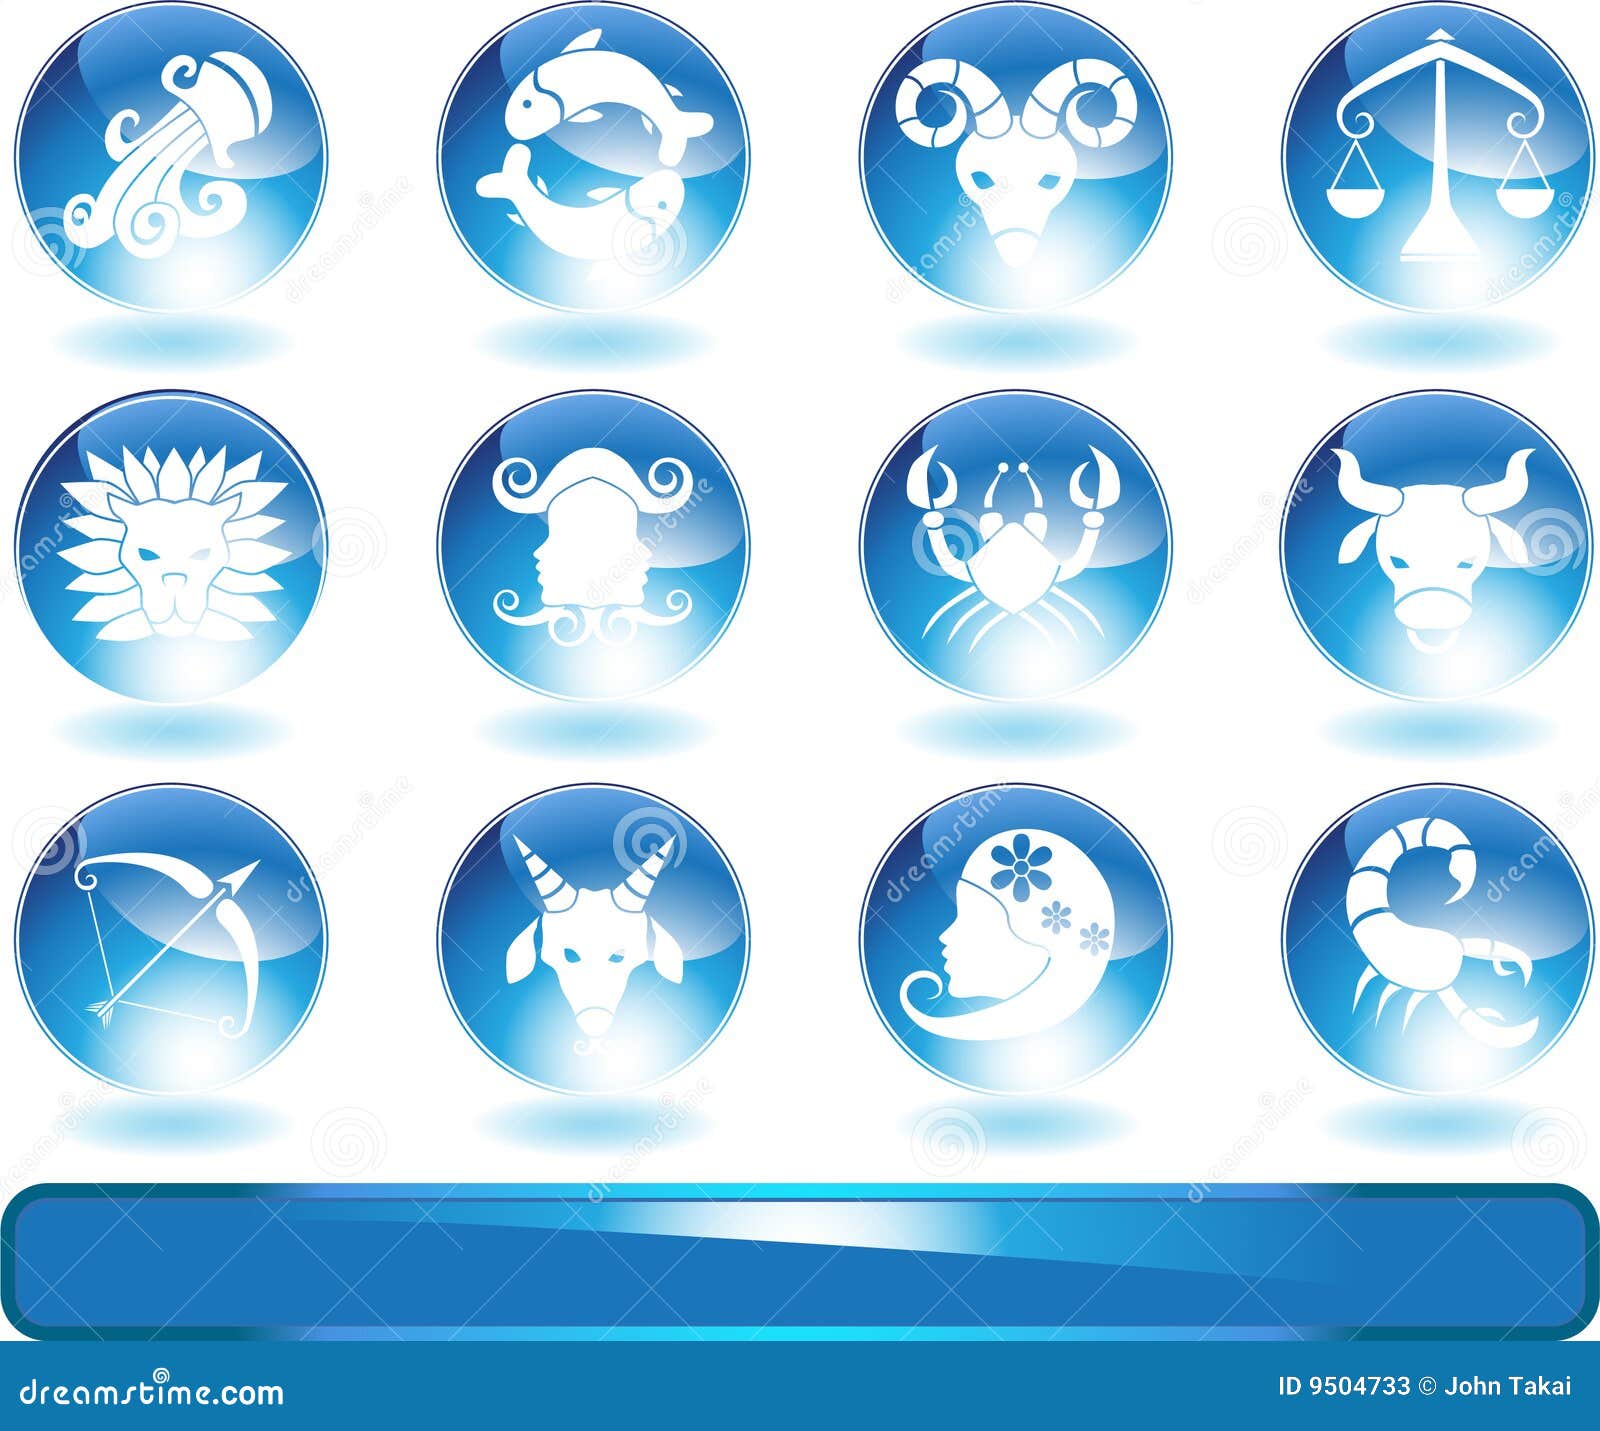 Zodiac Horoscope Icons - Round Stock Vector - Illustration of gemini ...